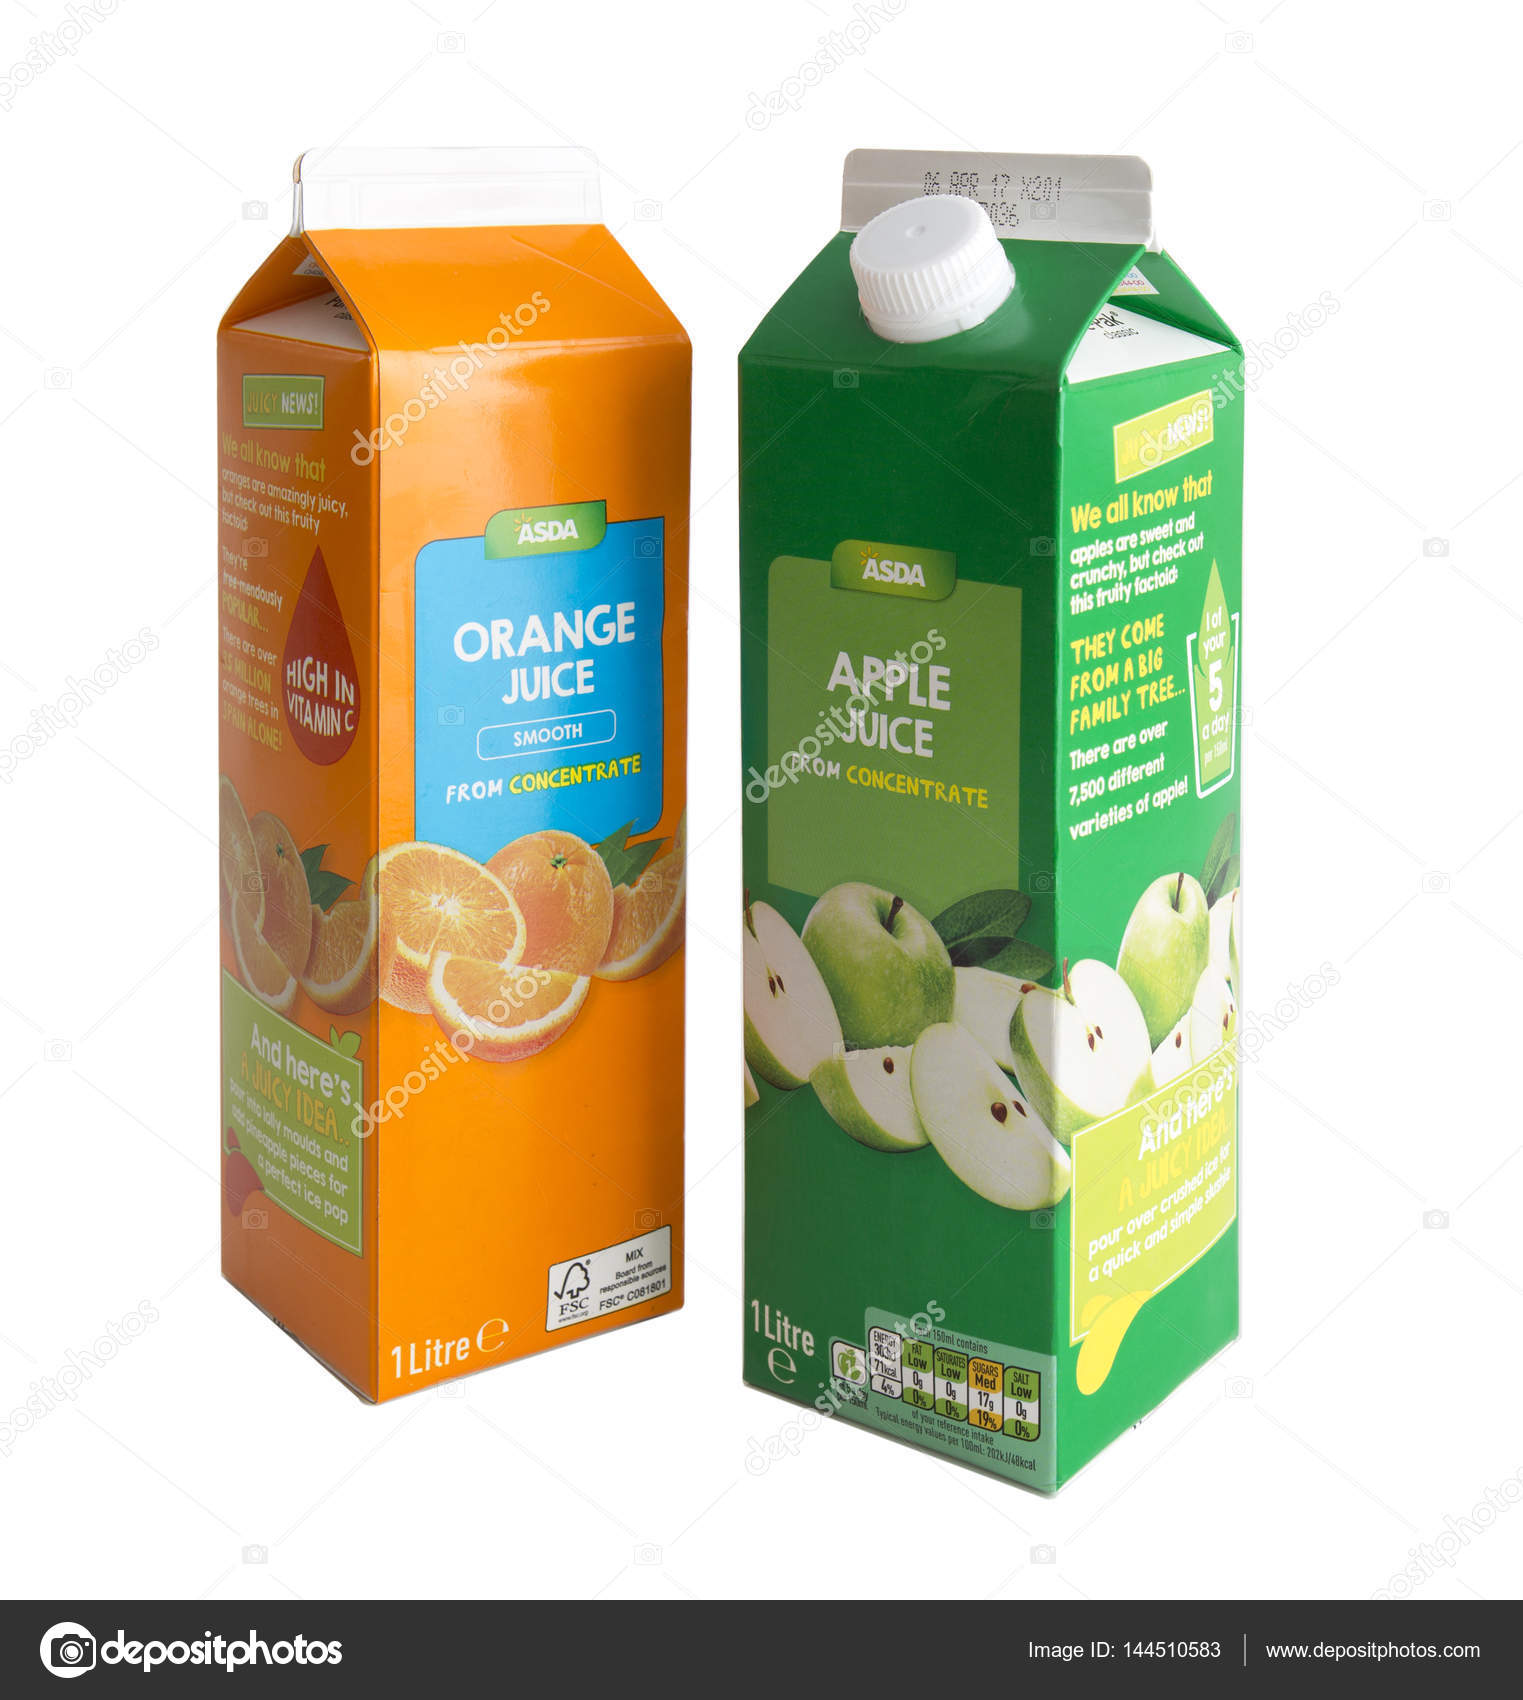 https://st3.depositphotos.com/1008960/14451/i/1600/depositphotos_144510583-stock-illustration-asda-orange-and-apple-juice.jpg